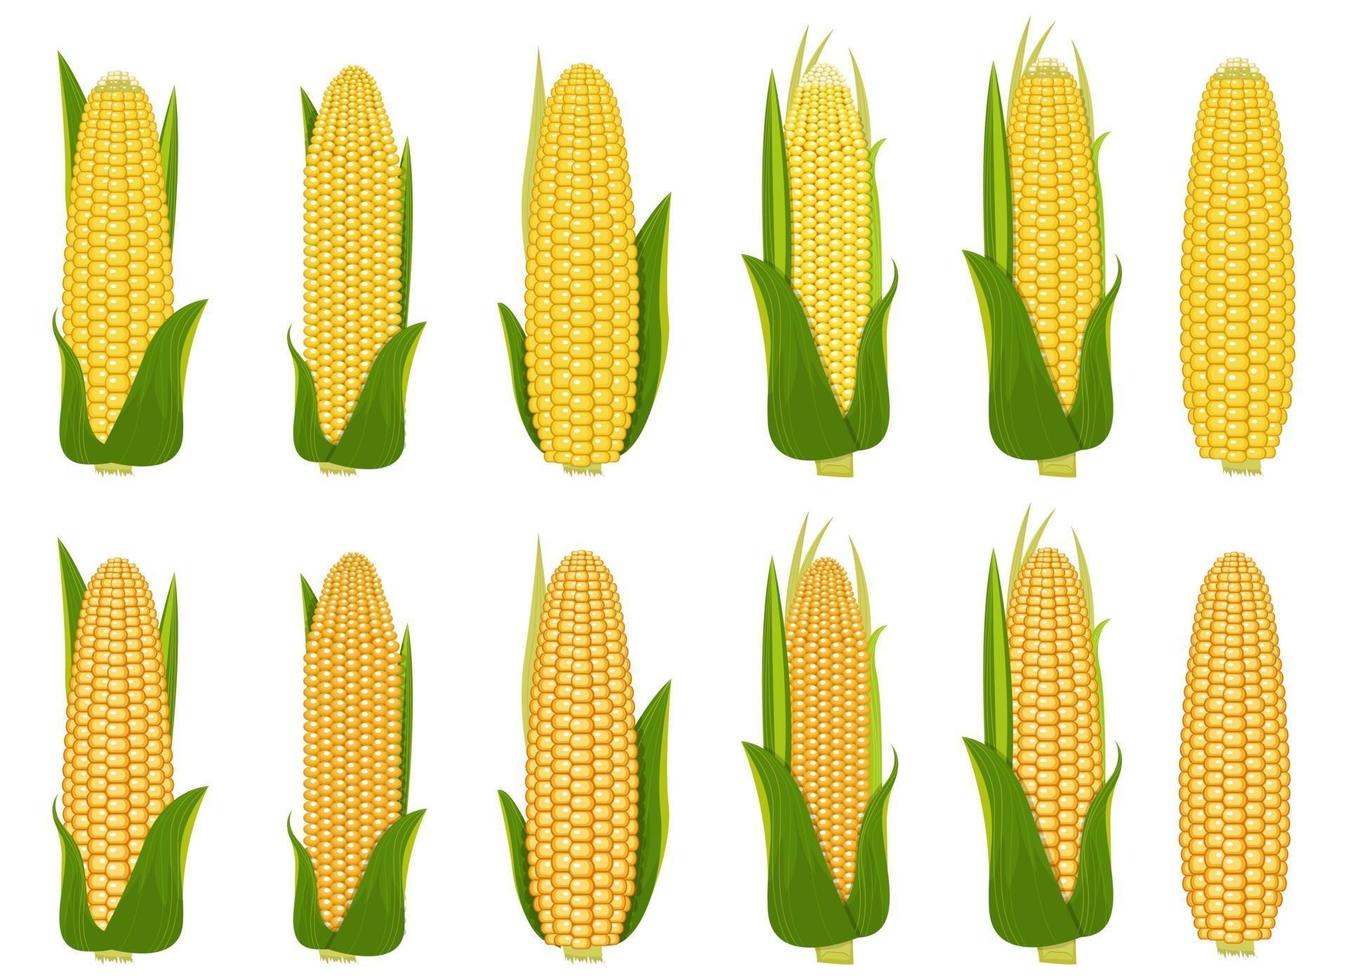 Corn vector design  illustration set isolated on white background